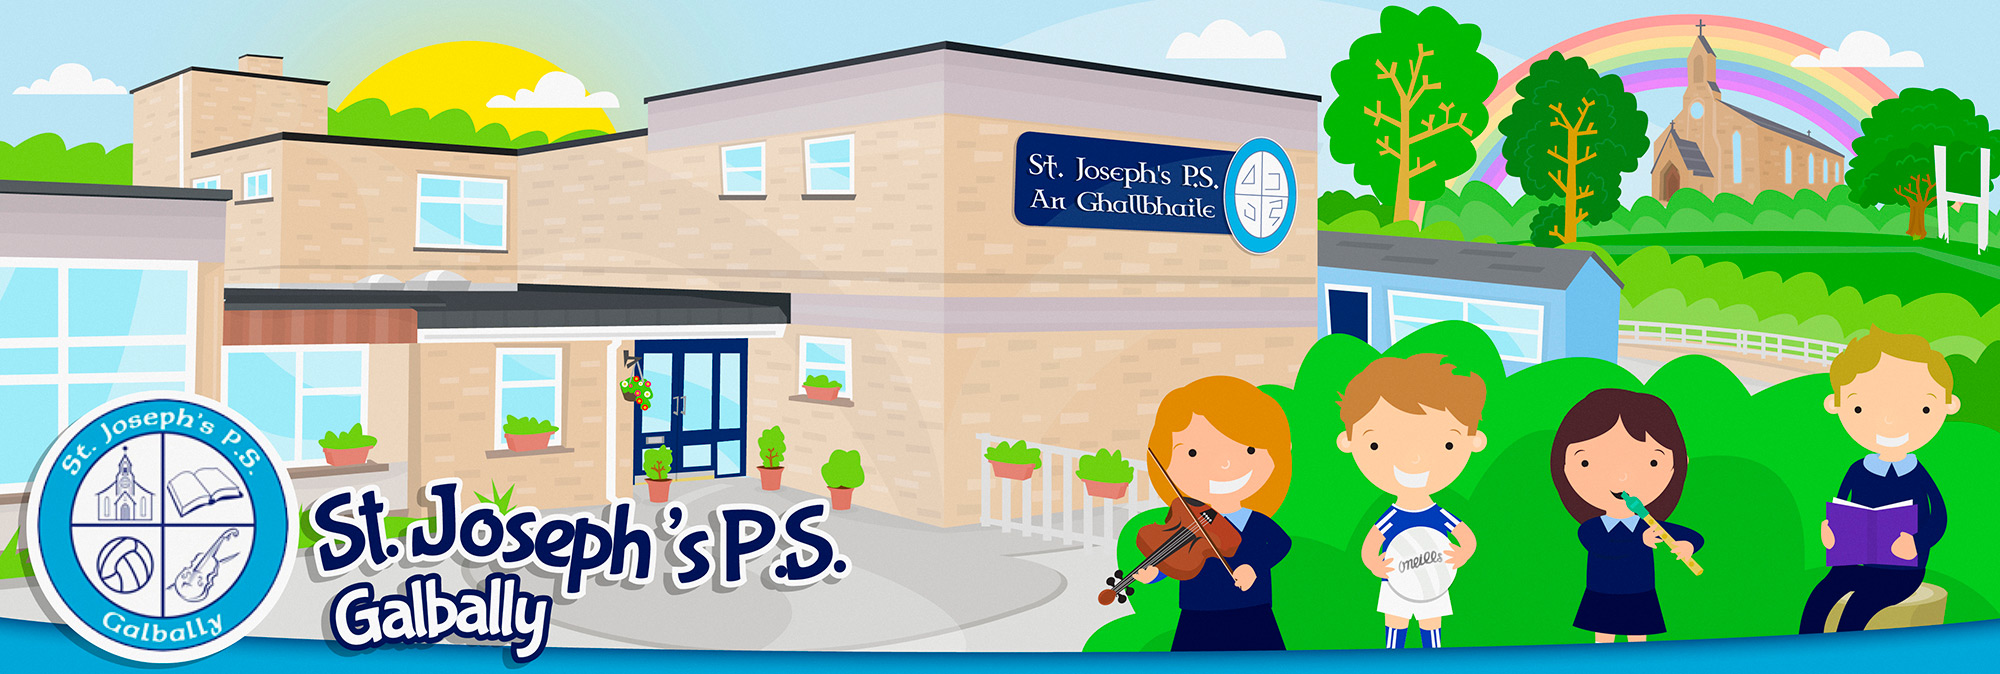 St. Joseph's Primary School, Galbally, Dungannon Co Tyrone